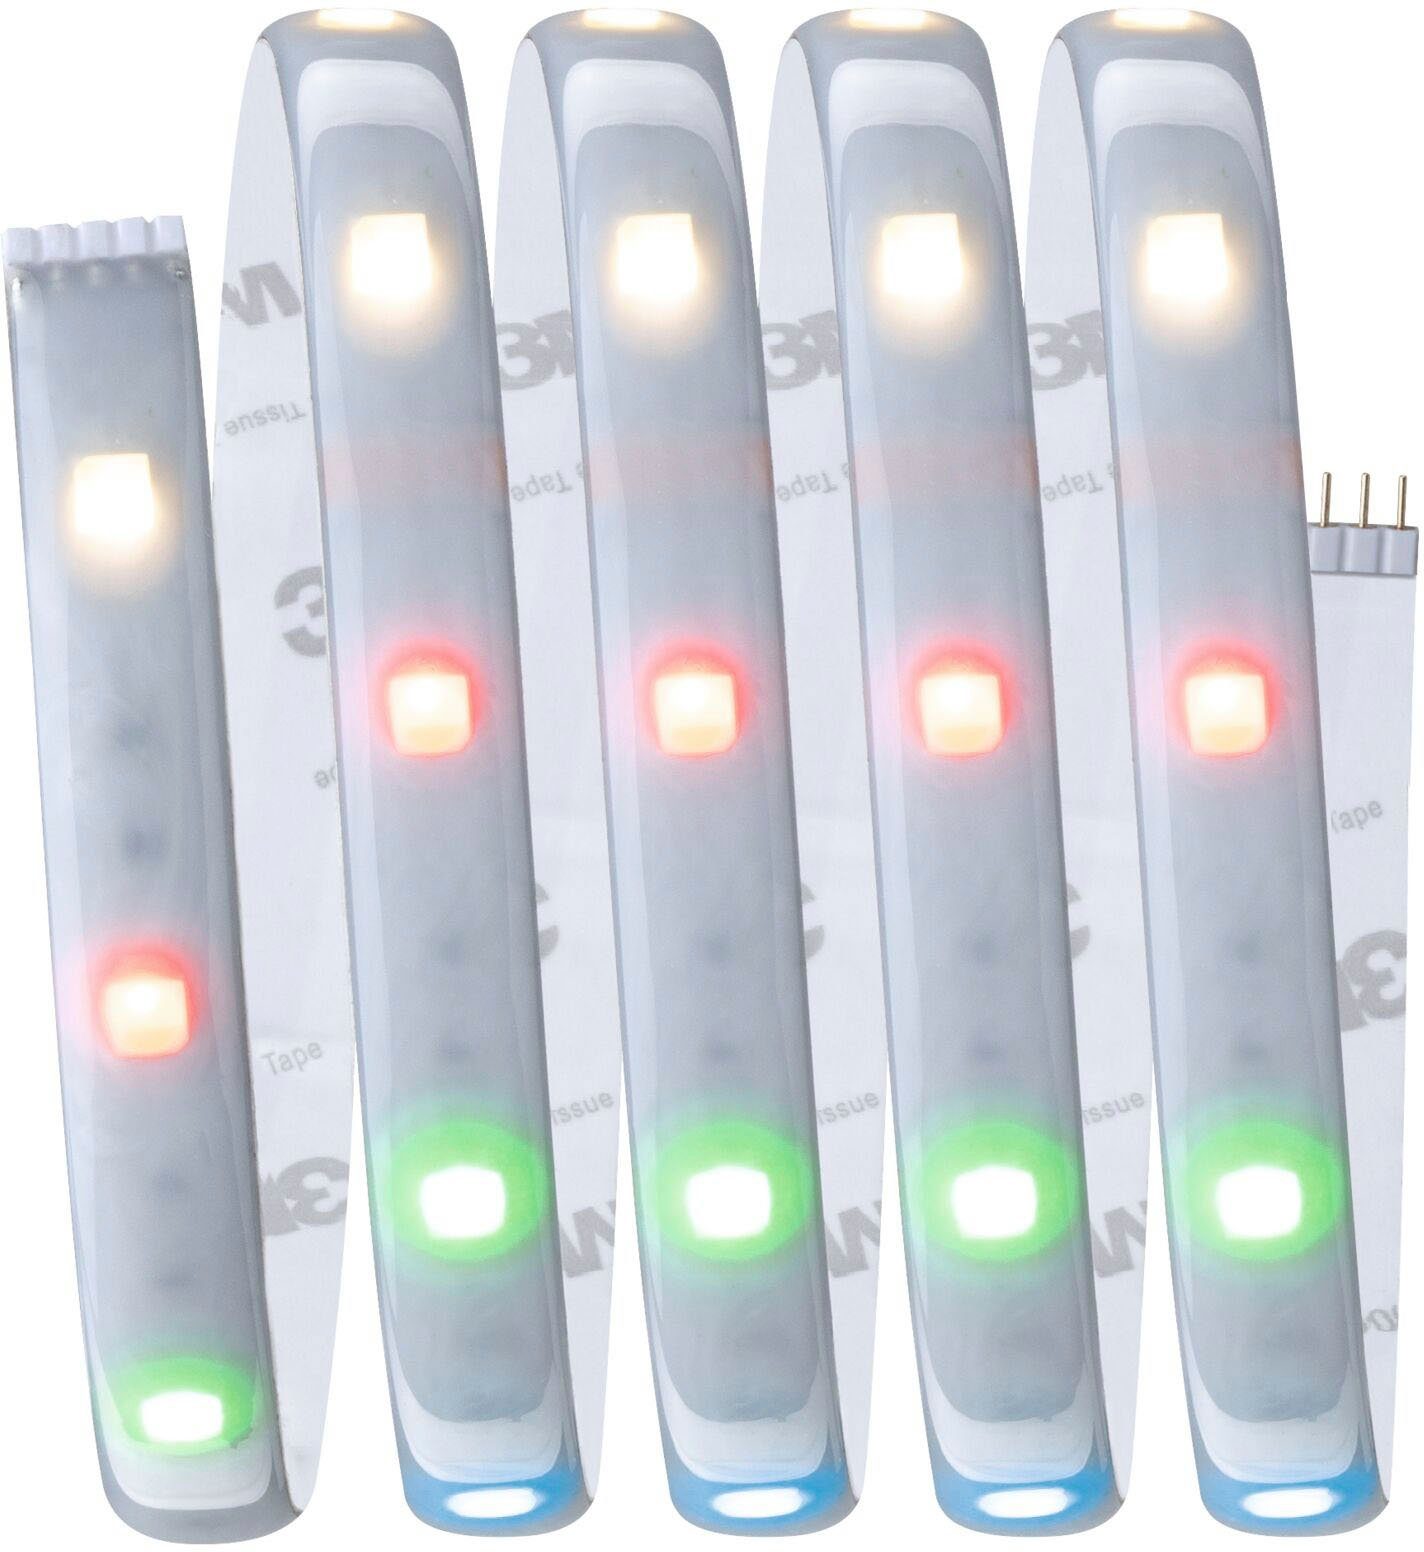 Paulmann LED-Streifen MaxLED 250 RGBW, Basisset beschichtet 1,5m, 1-flammig, 9W 300lm, Zigbee Smart 300l Home IP44